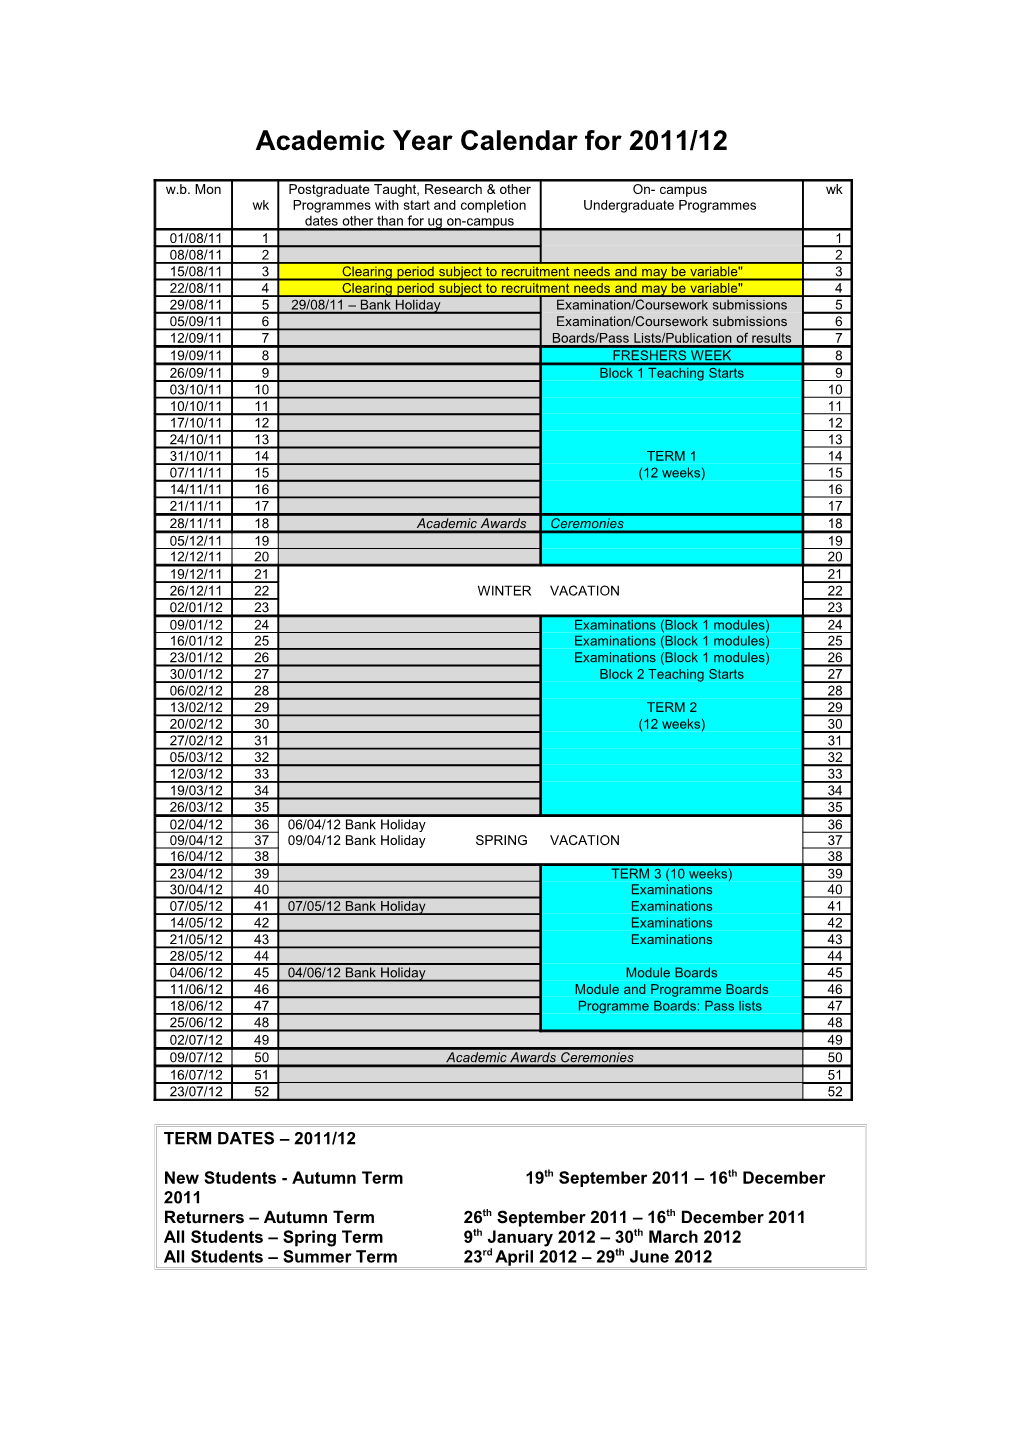 Academic Year Calendar for 2005/06